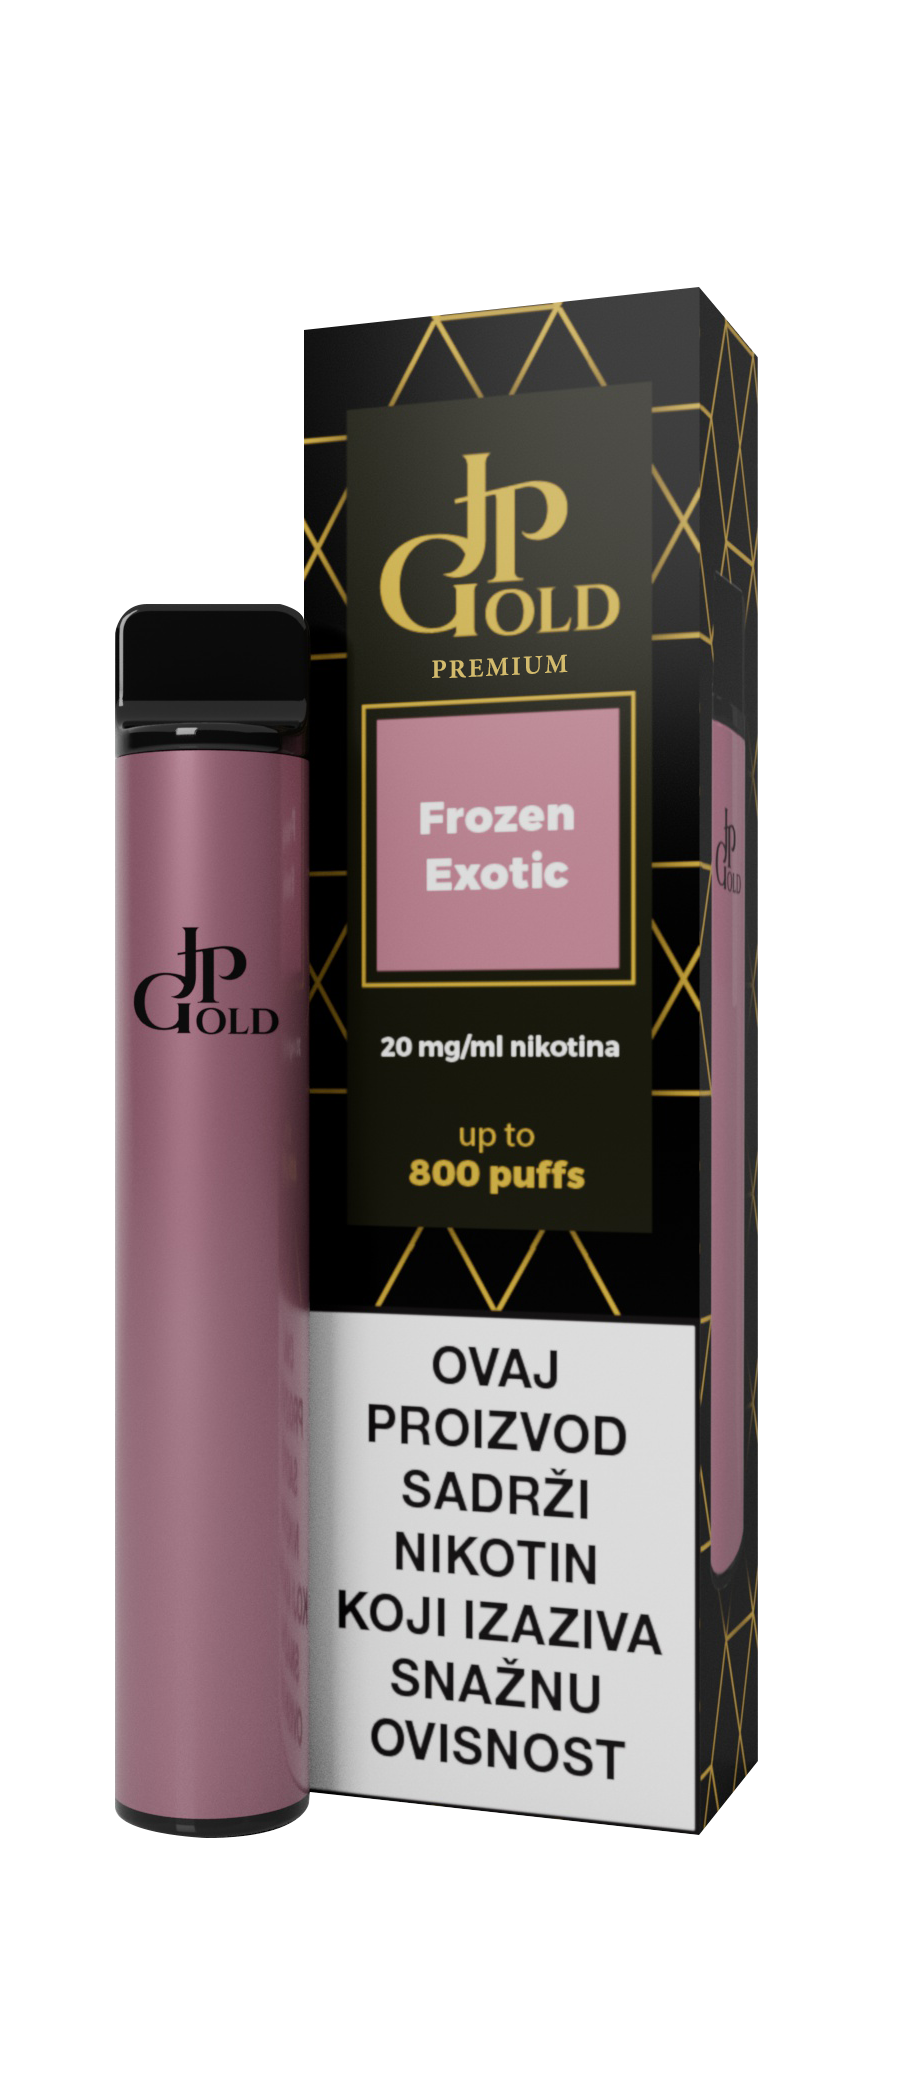 JP GOLD Premium, Frozen Exotic; 20mg nicotine